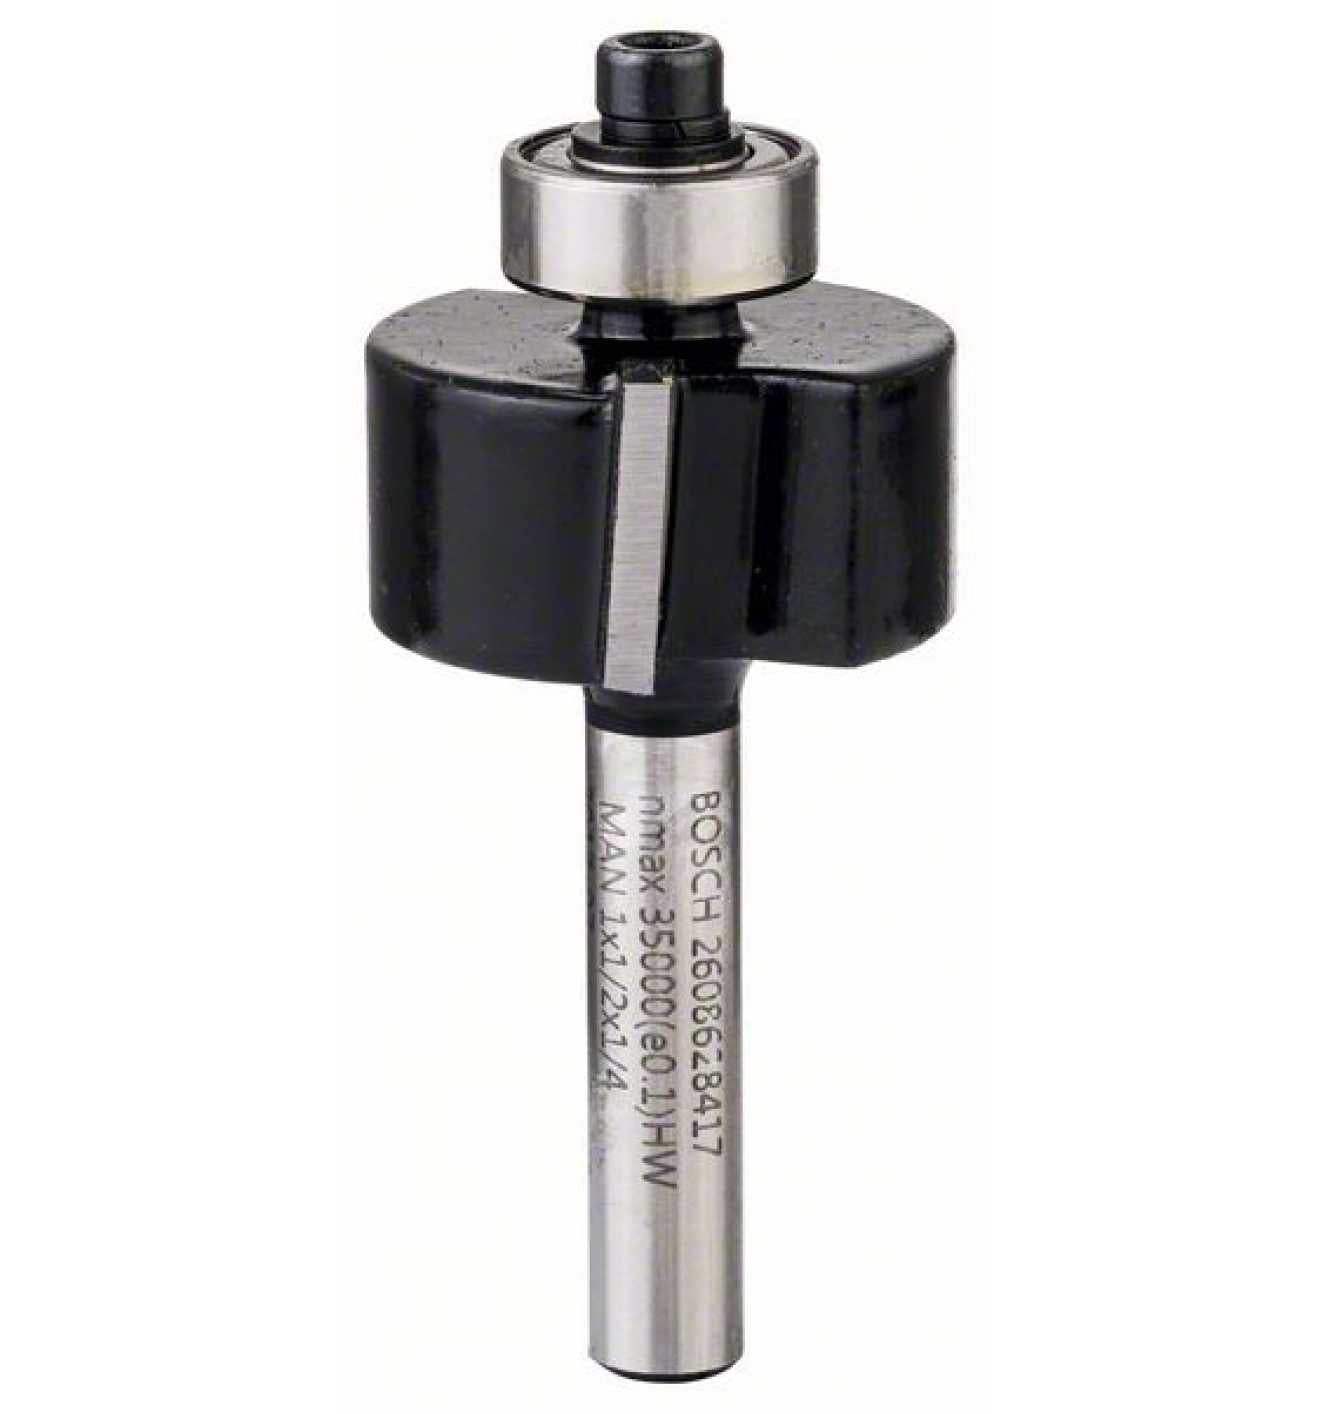 Bosch Rabbeting bit, 1/4", D1 25.4 mm, L 12.7 mm, G 54 mm 2608628417 Power Tool Services